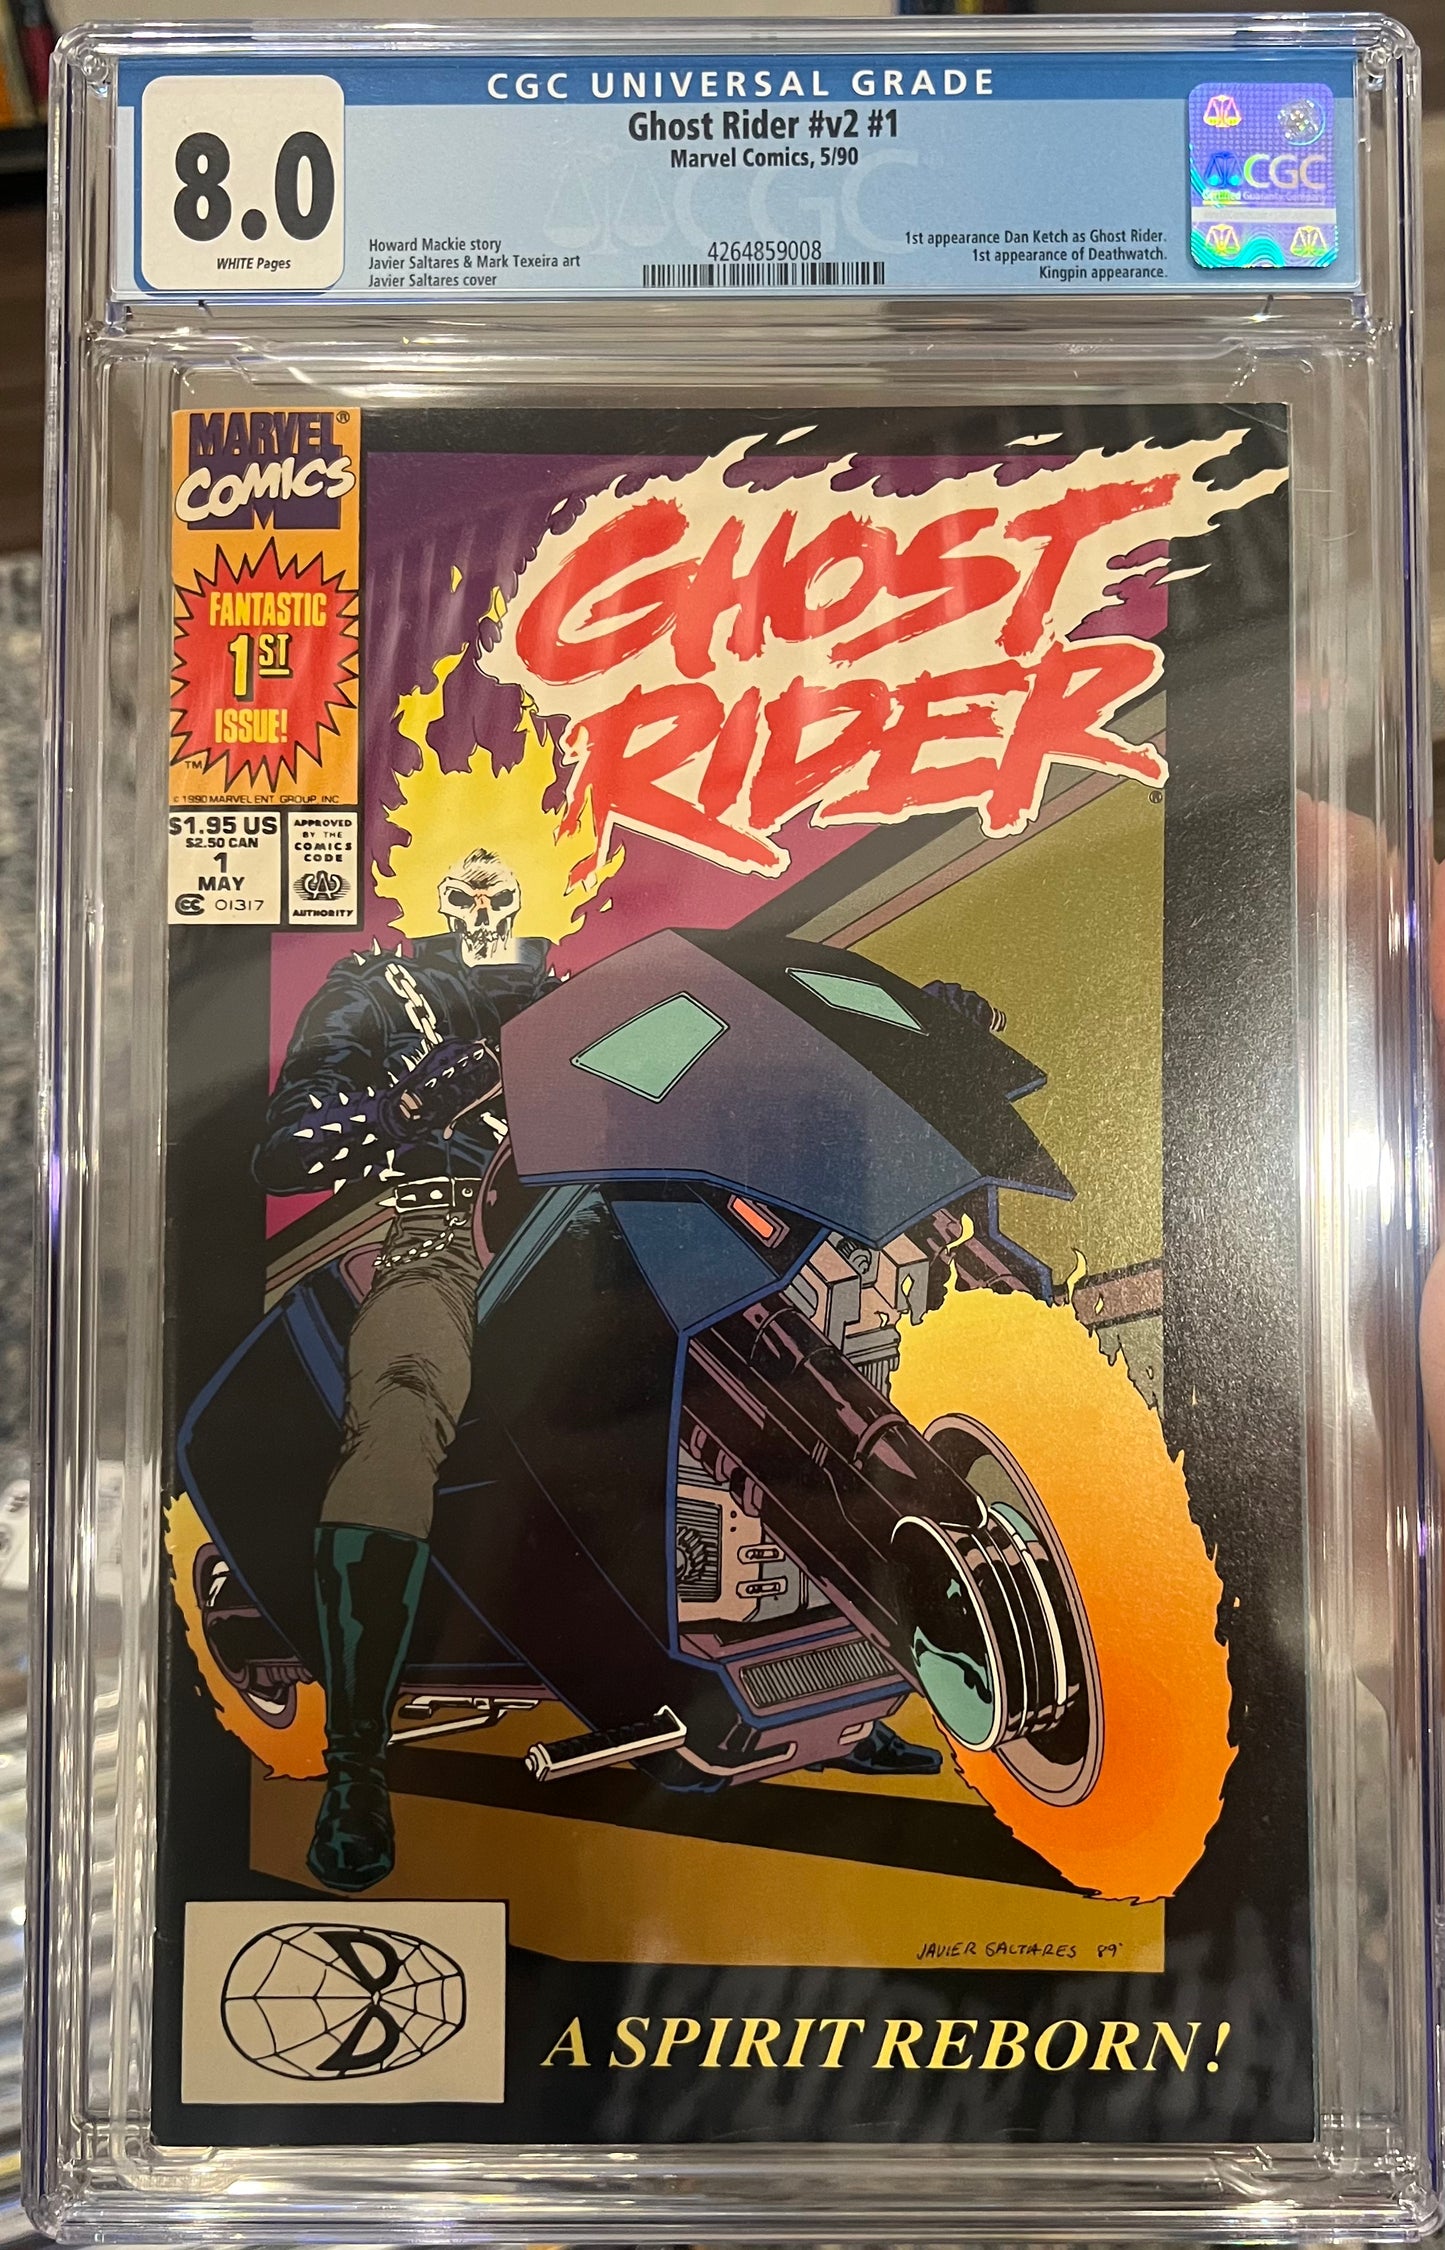 Ghost Rider #v2 #1 CGC 8.0 (Marvel Comics, 1990)